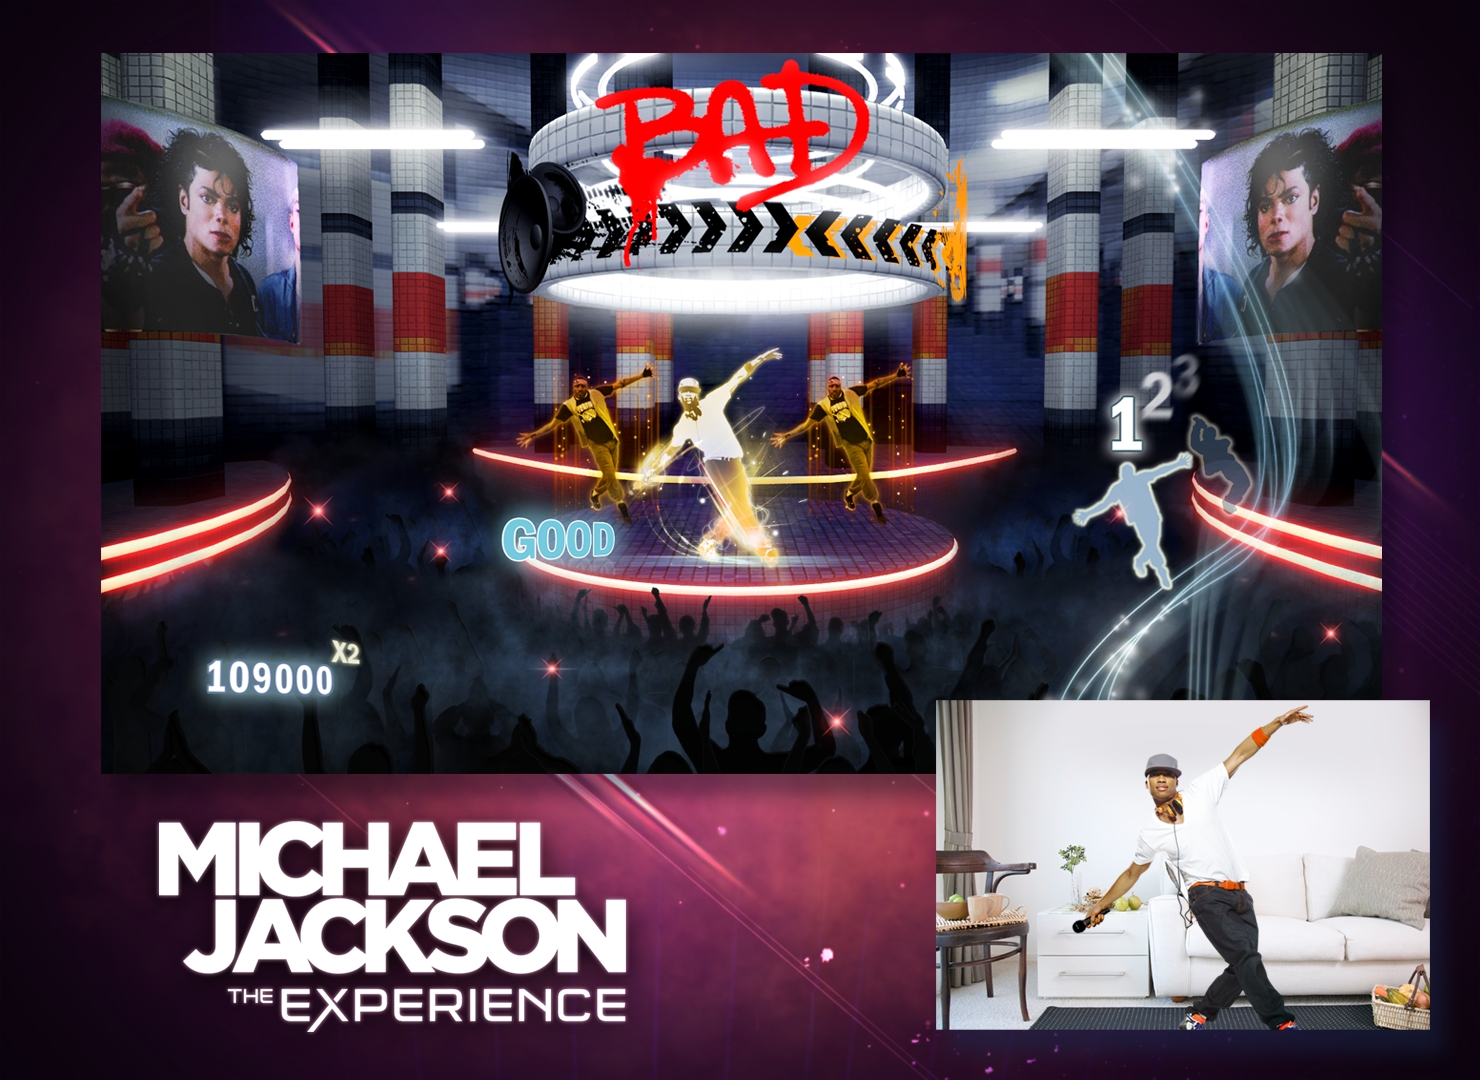 Michael Jackson The Experience (Xbox 360) Ubisoft, 8888526292 - image 5 of 6